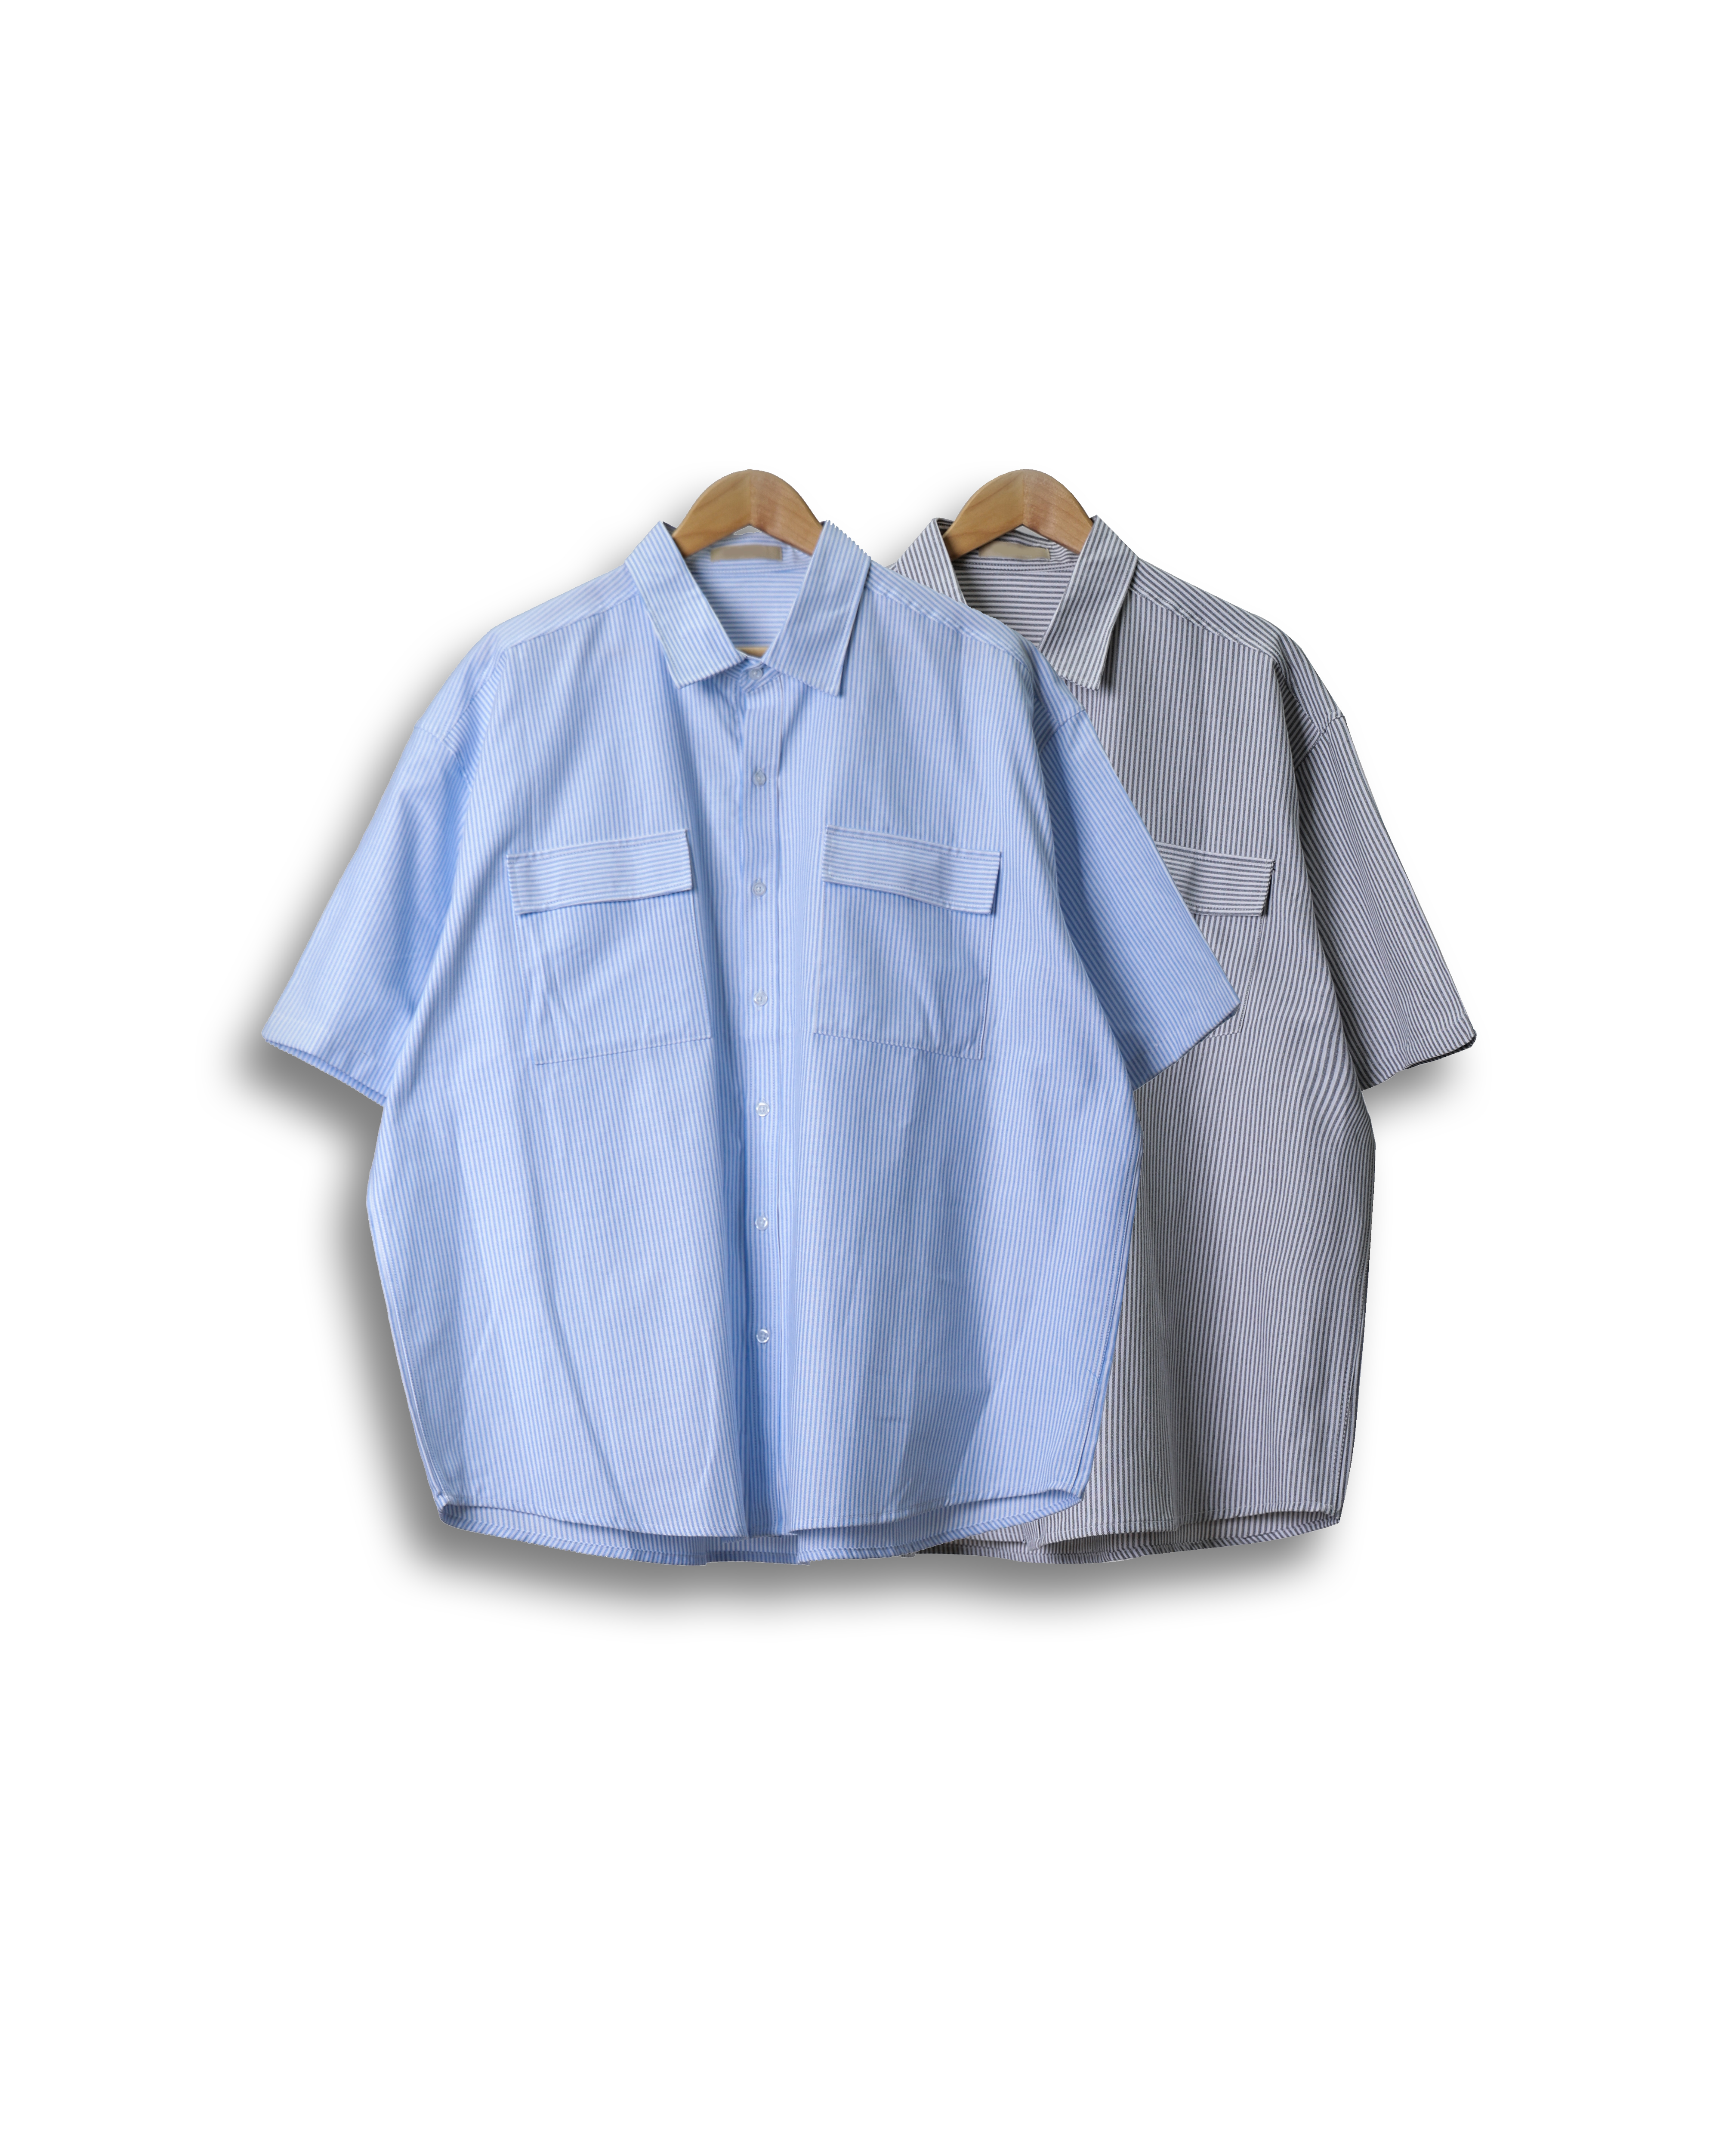 SPRY Two Pocket City Striped Half Shirts (Black/Sky Blue) - 3차 리오더 (스카이블루 6/13 배송예정)